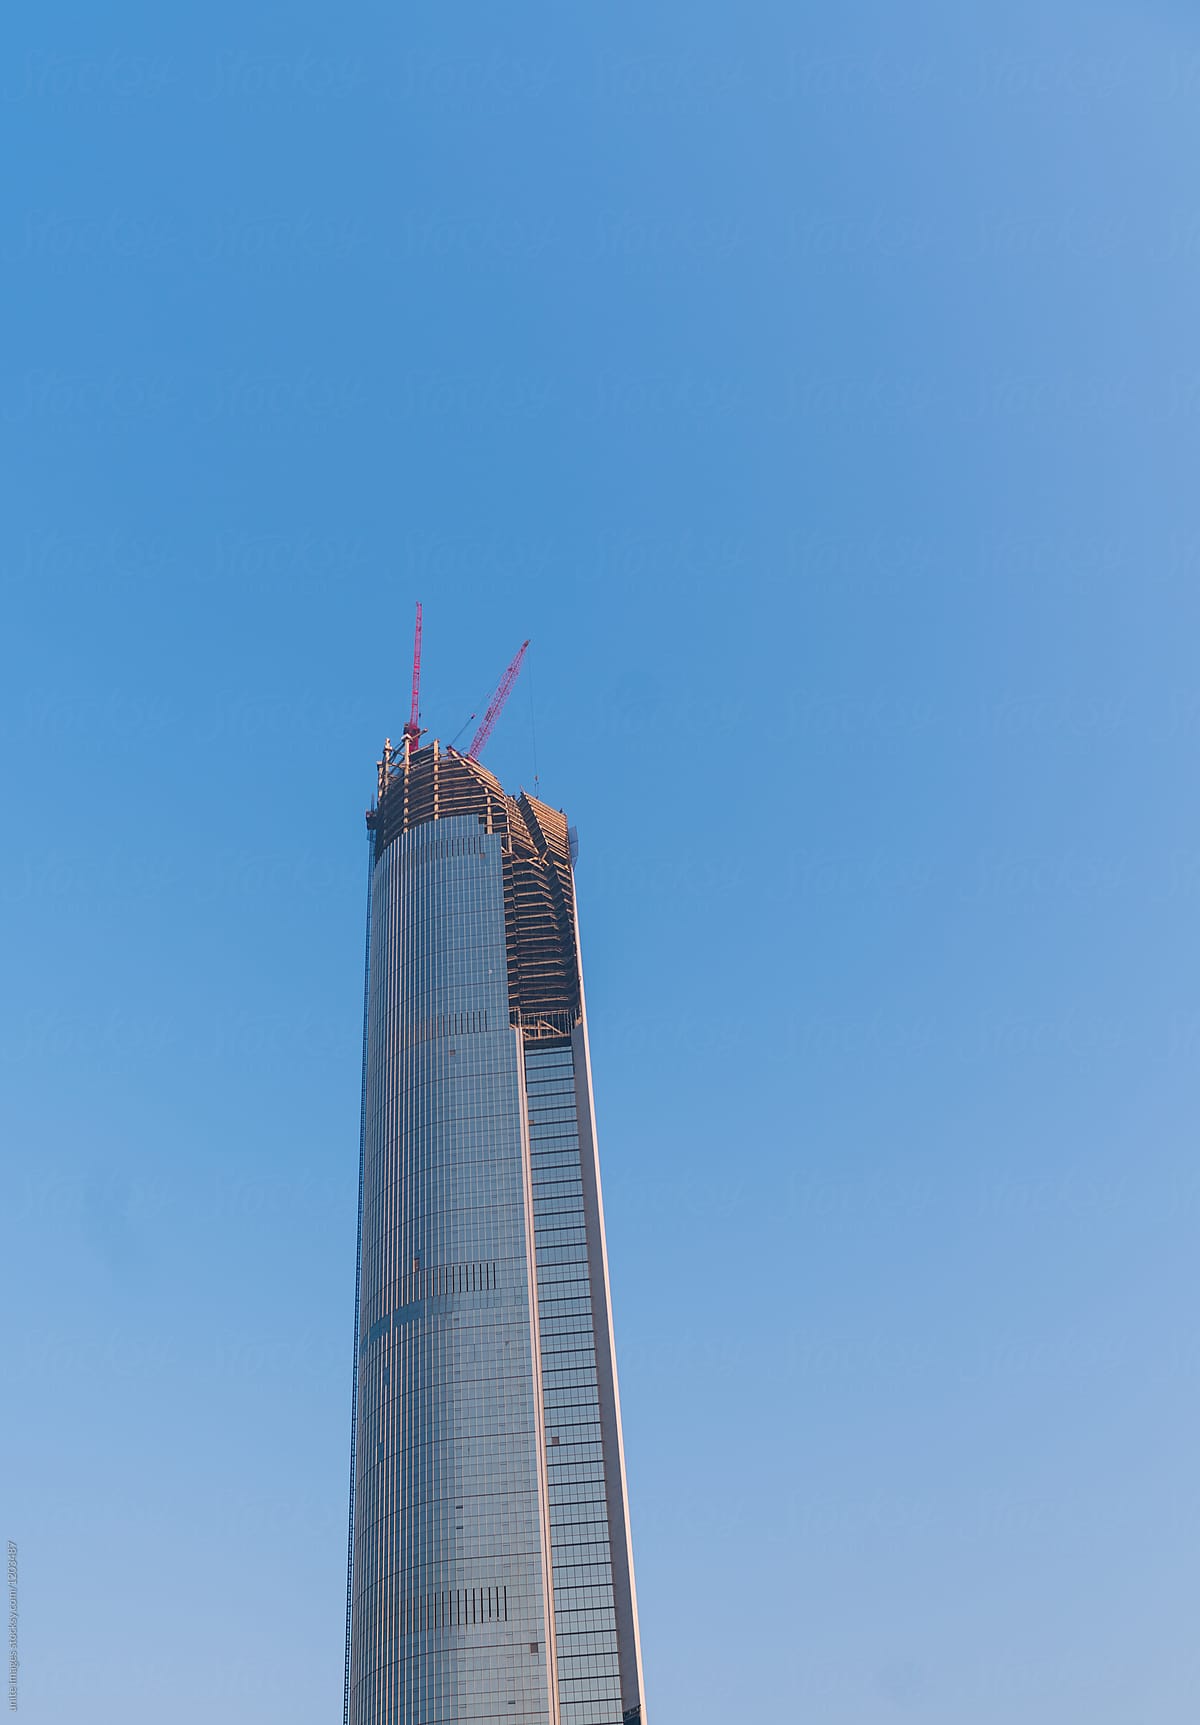 Crane and skyscraper construction site against blue sky